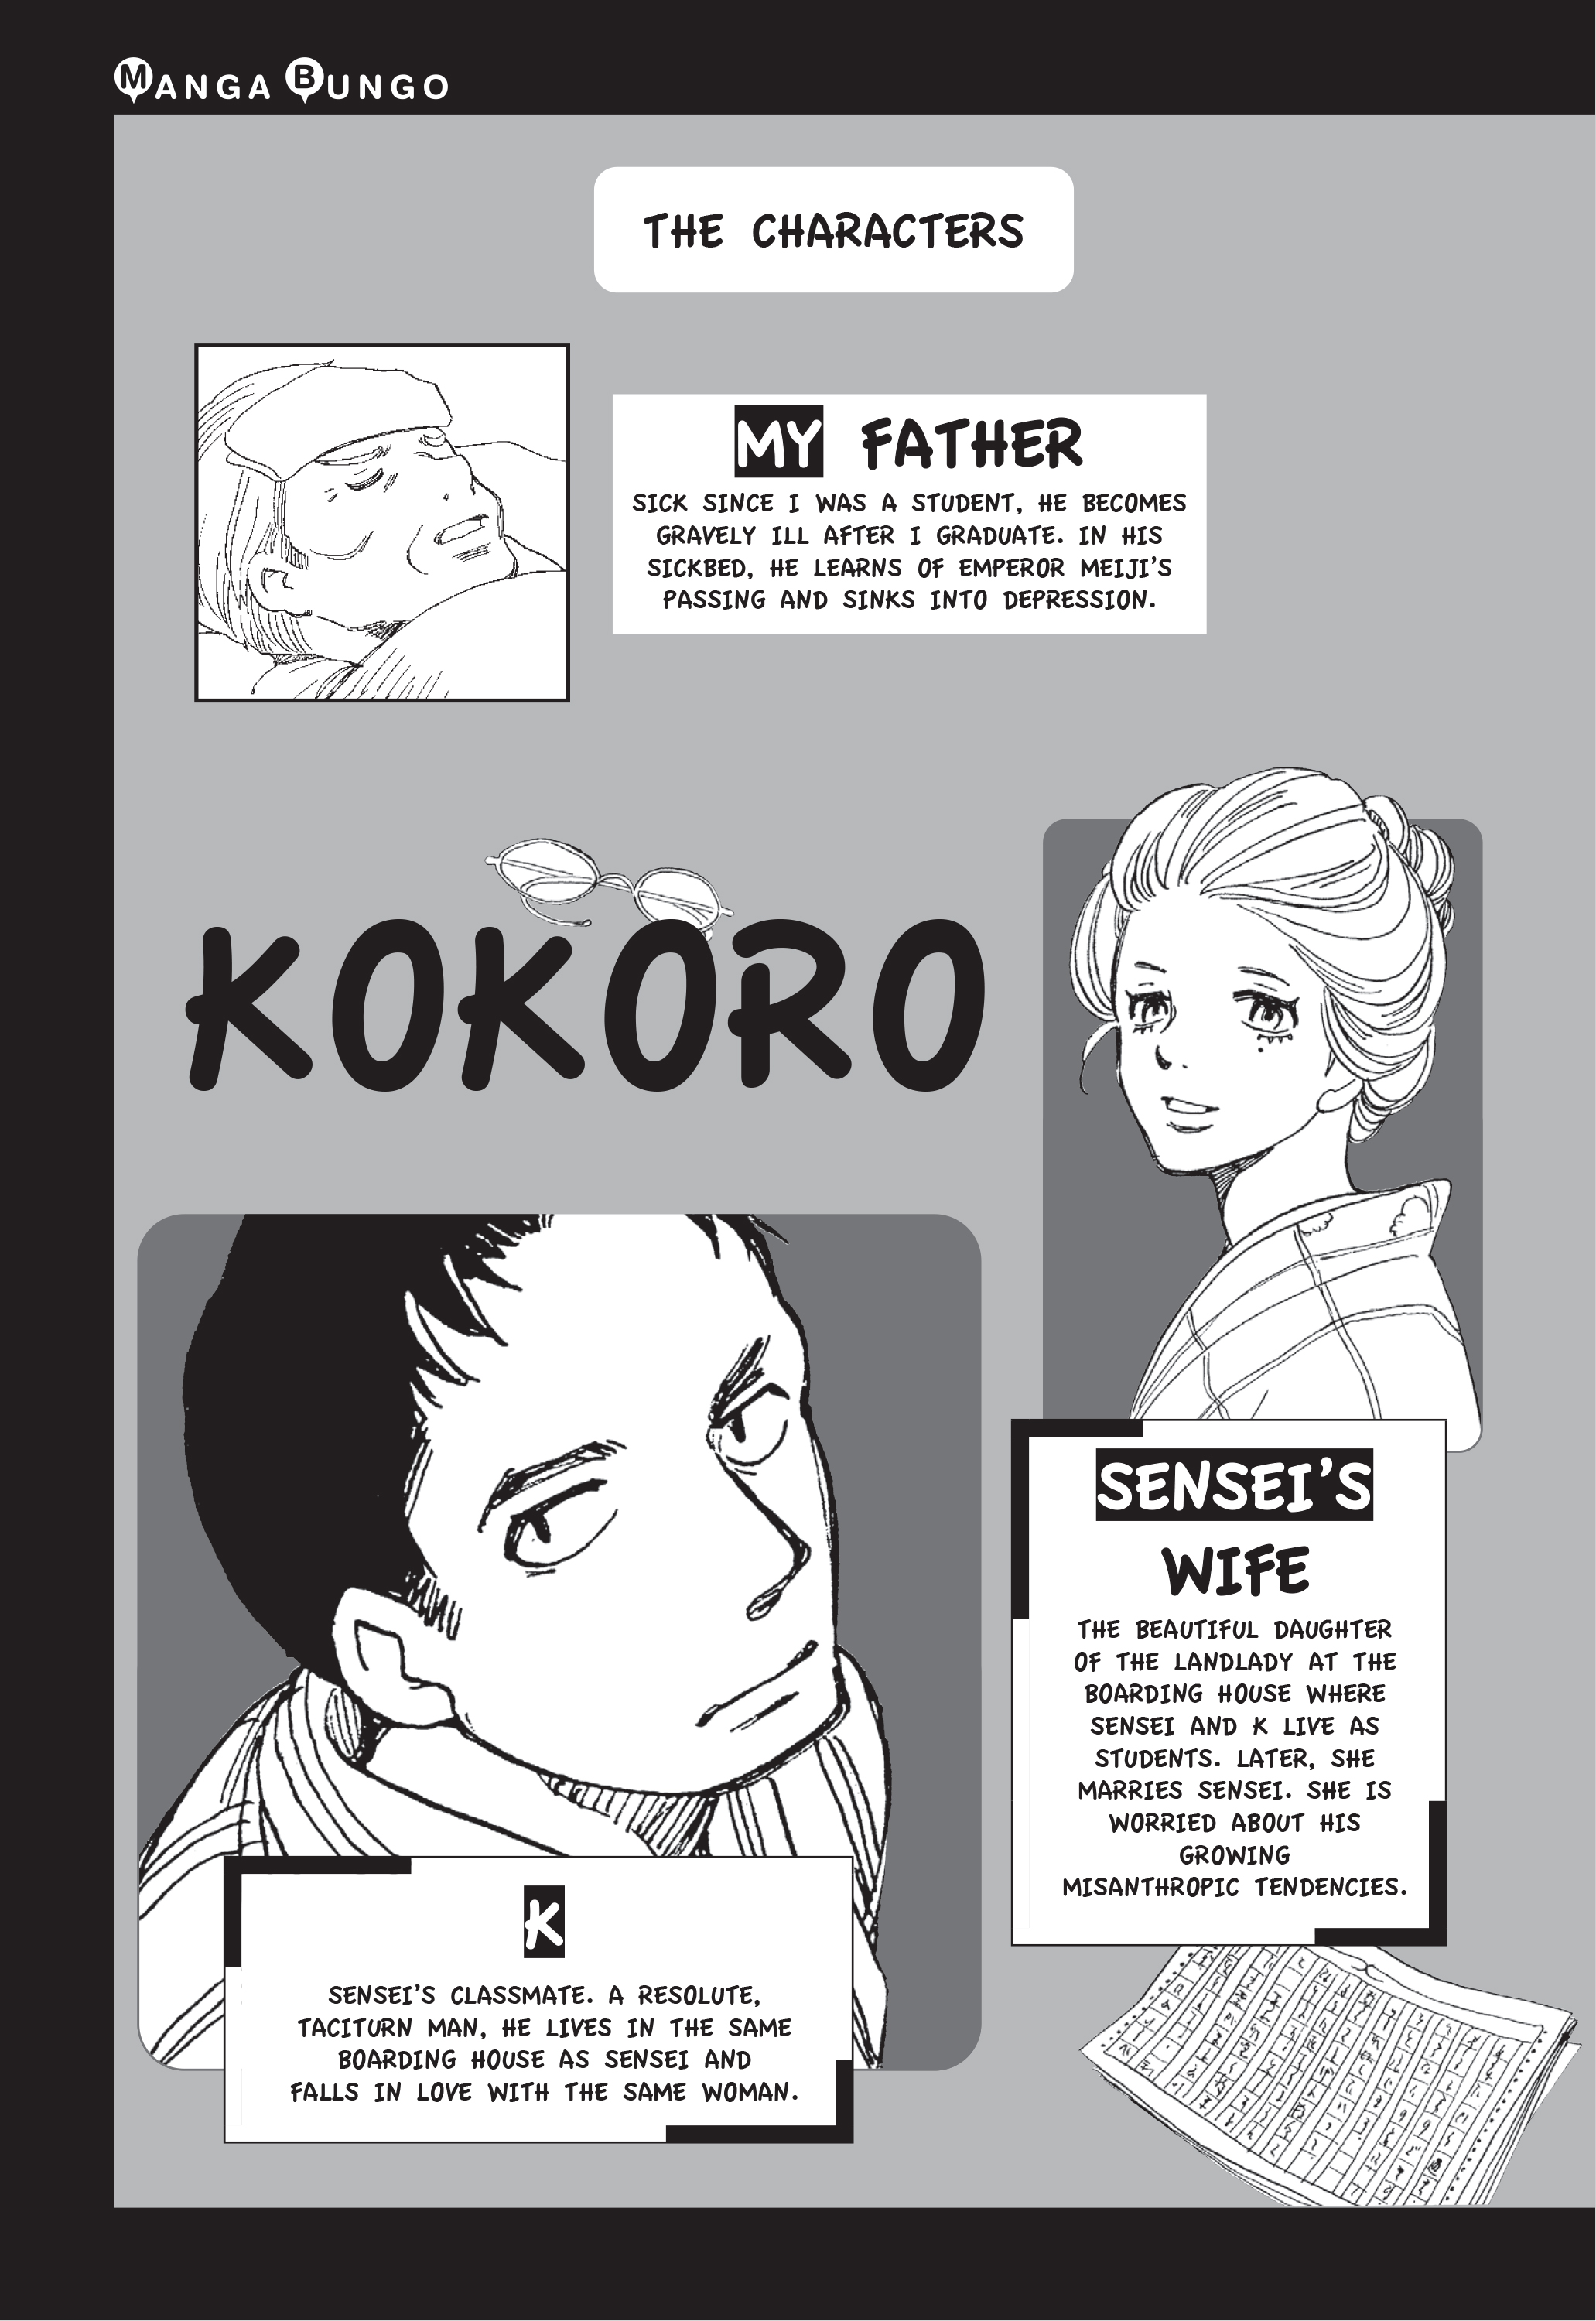 Soseki Natsume's Kokoro: The Manga Edition